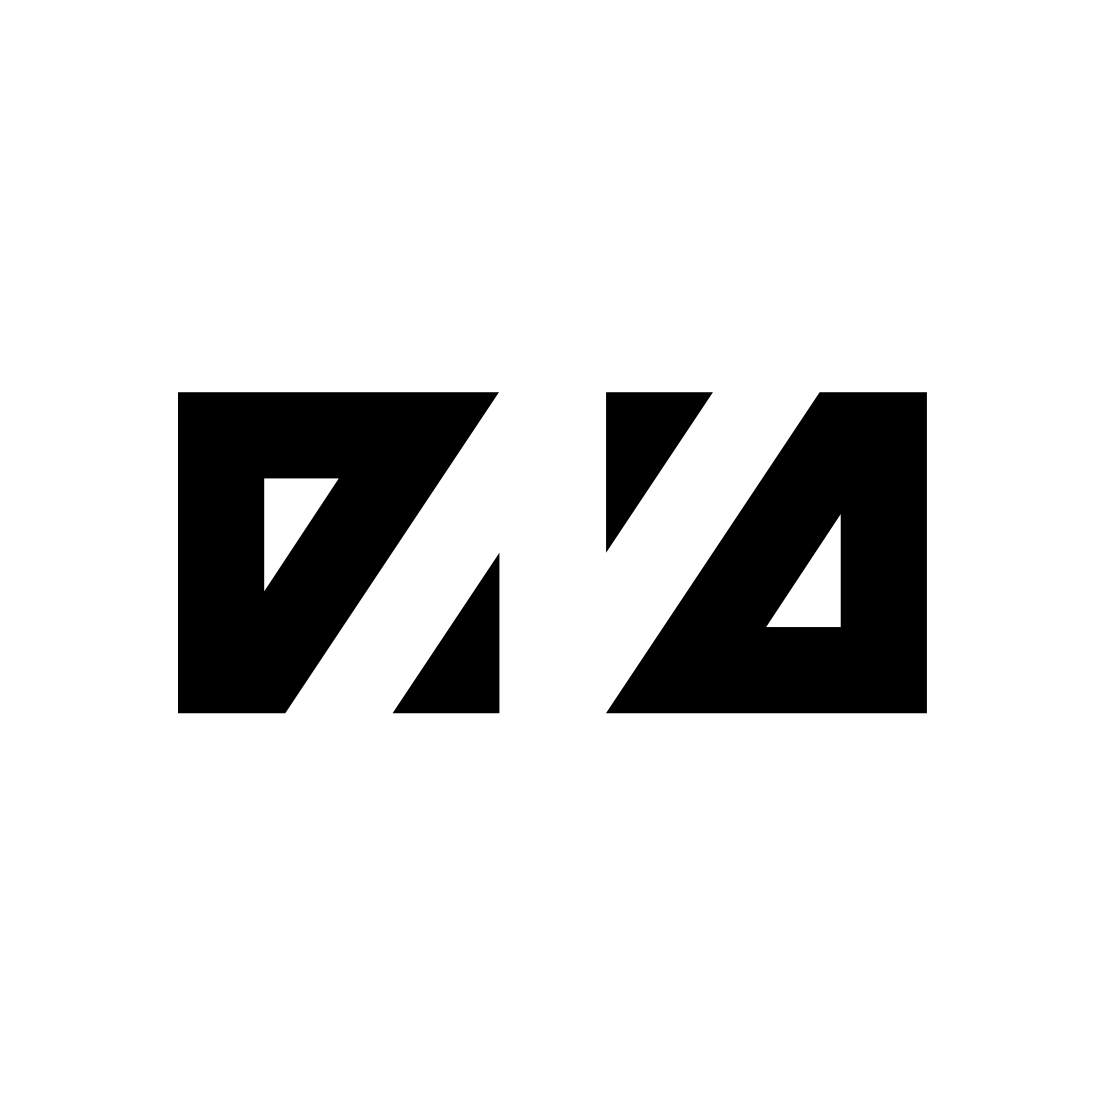 DNA Logo logo design by logo designer Karl McCarthy Design for your inspiration and for the worlds largest logo competition